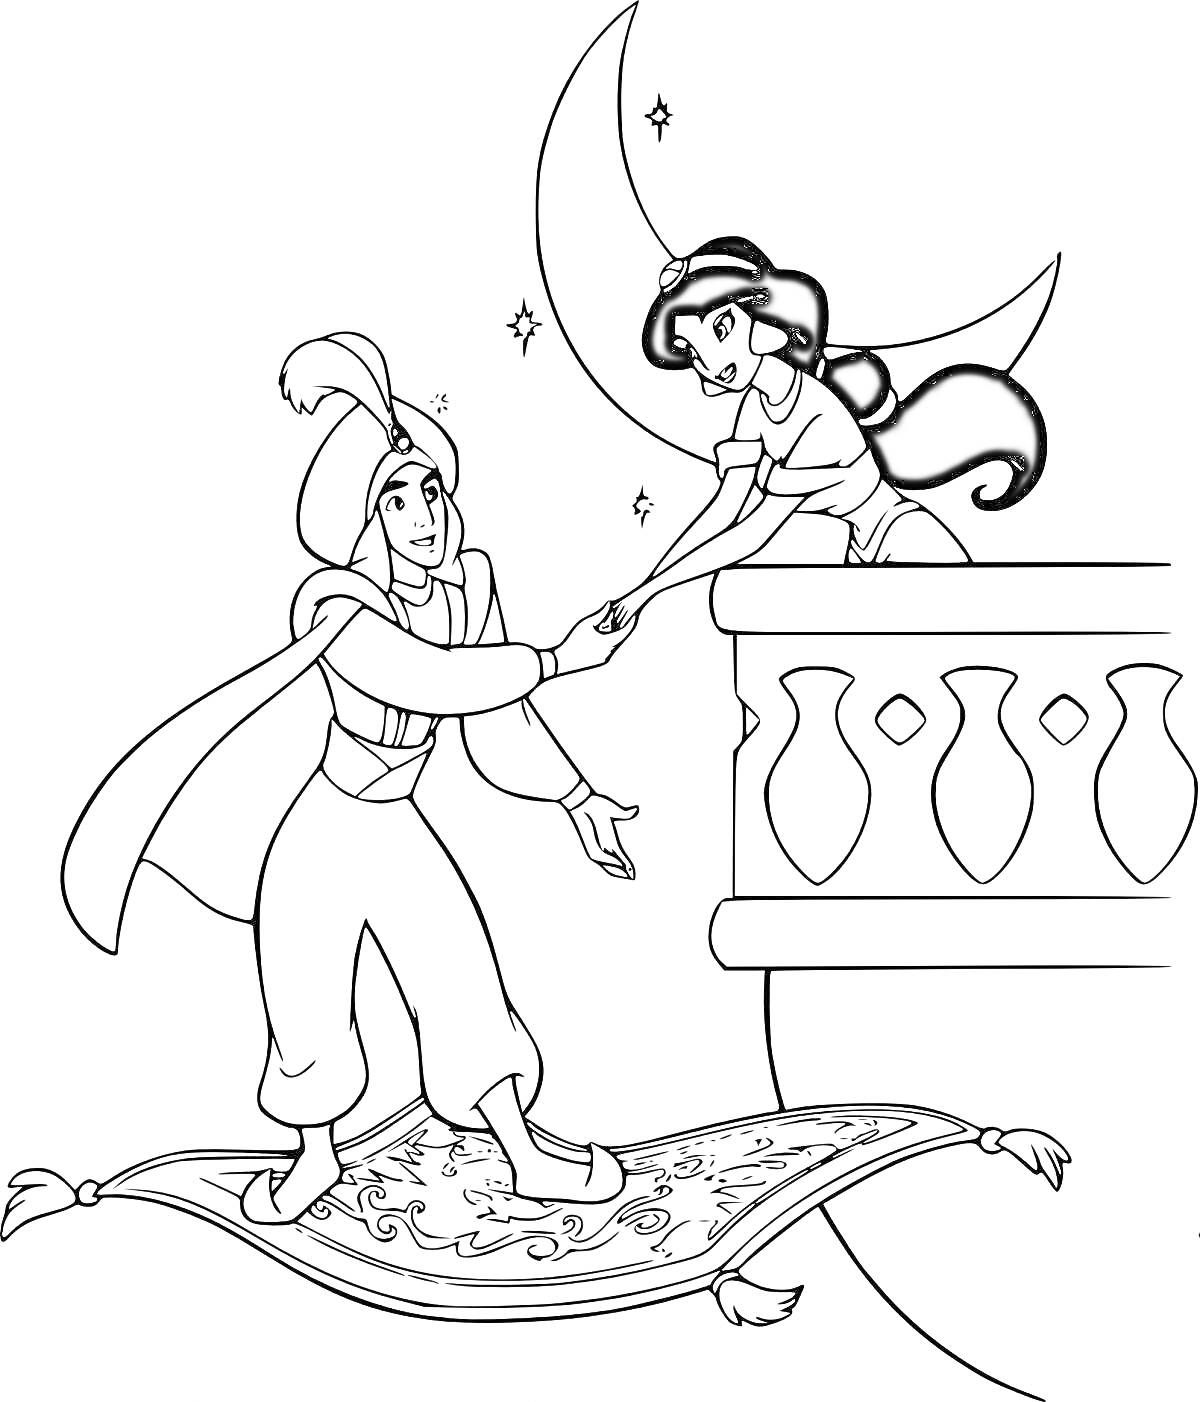 Раскраска Алладин на ковре-самолете и принцесса на балконе под луной